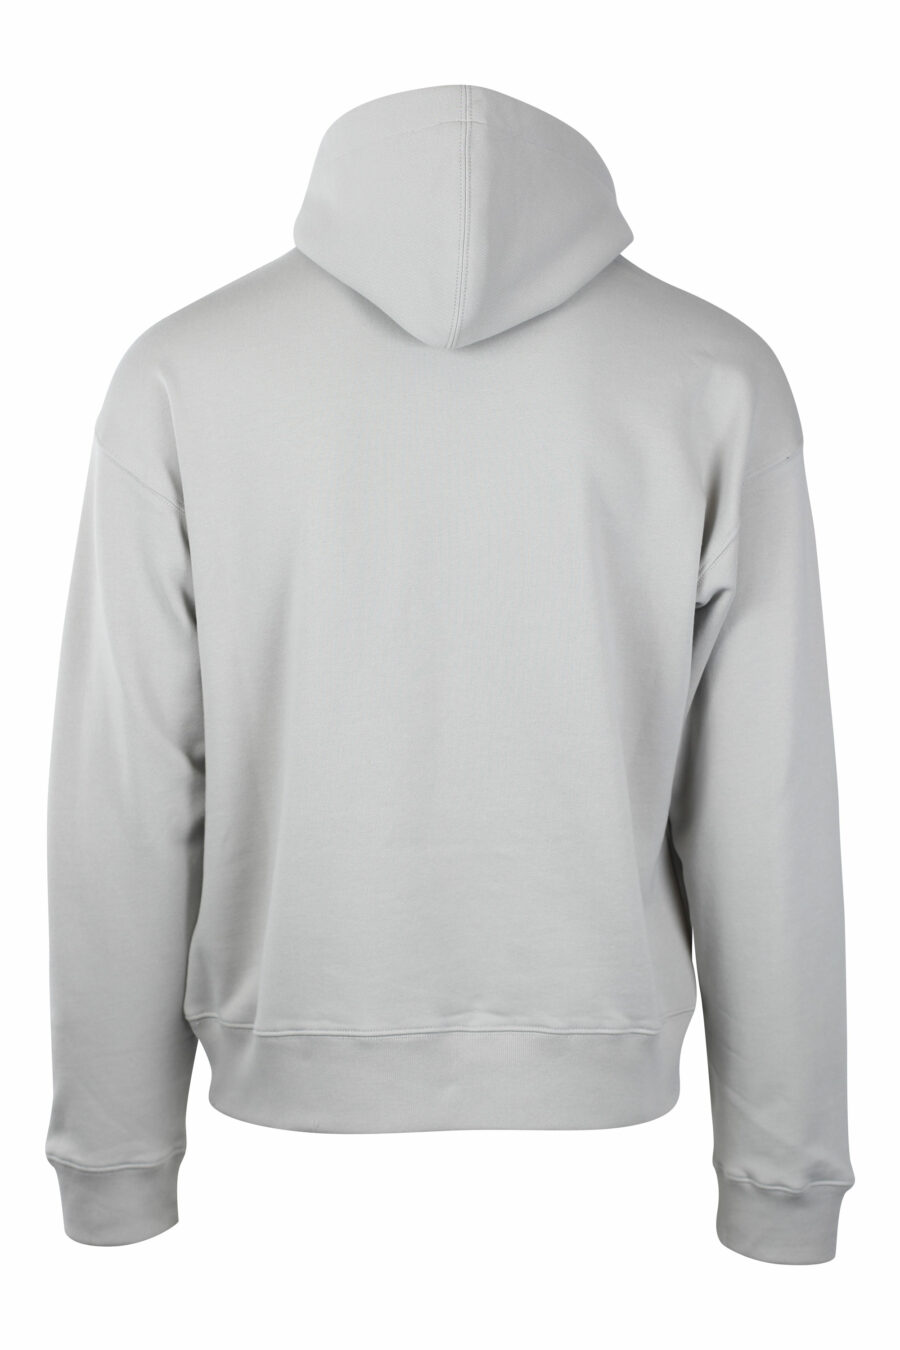 Graues Kapuzensweatshirt mit einfarbigem Bärchen-Mini-Logo - IMG 1400